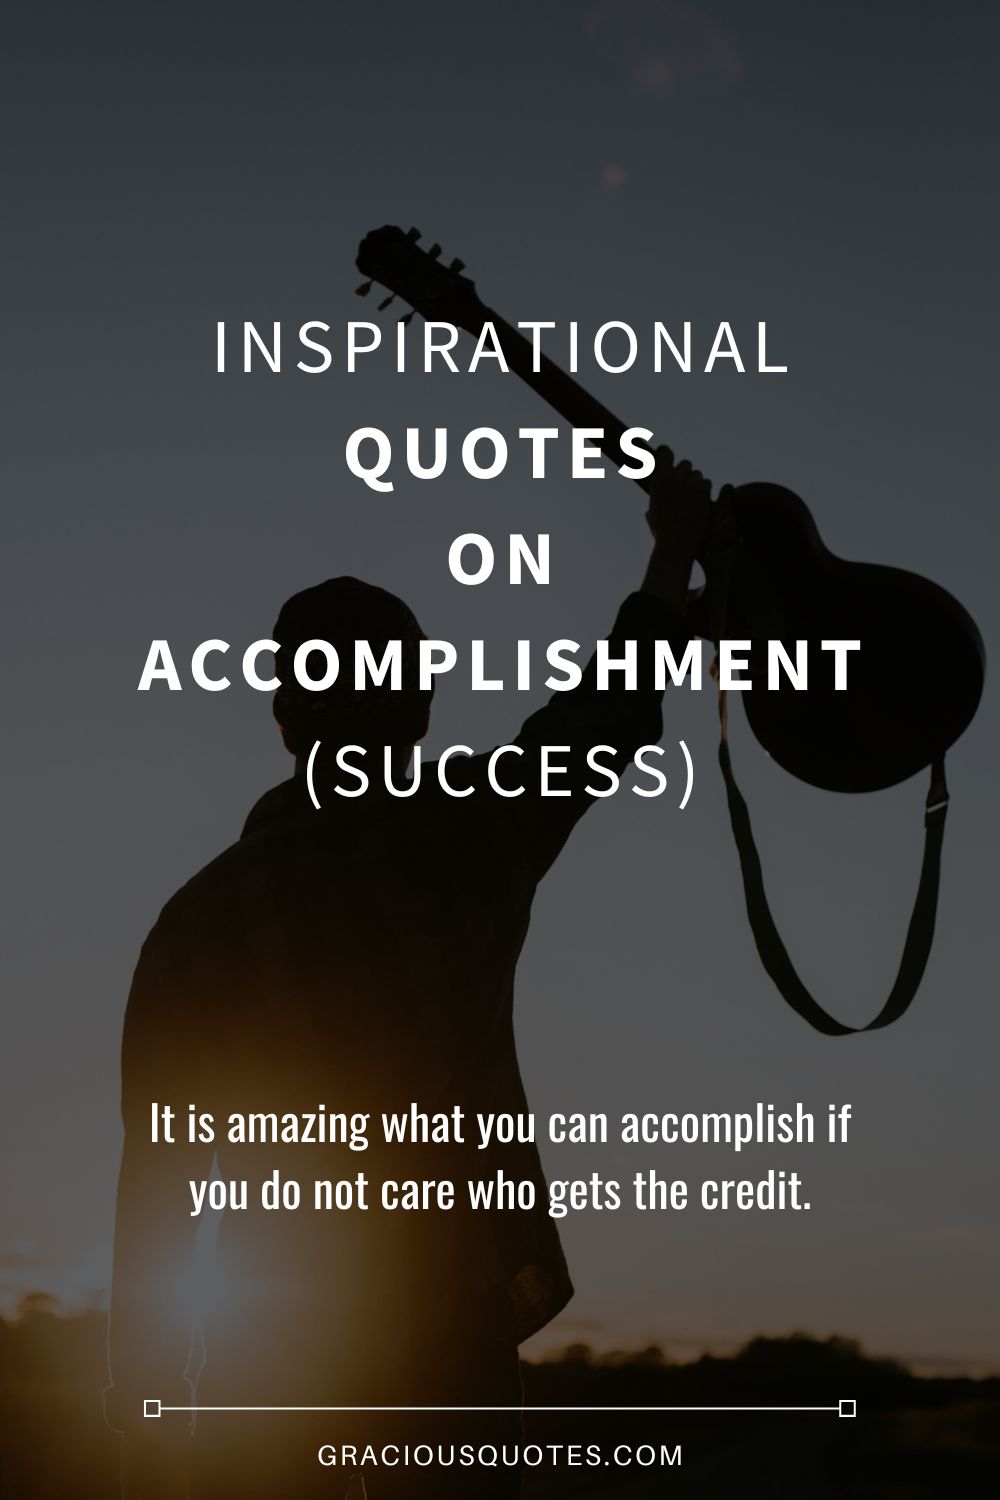 Inspirational Quotes on Accomplishment (SUCCESS) - Gracious Quotes